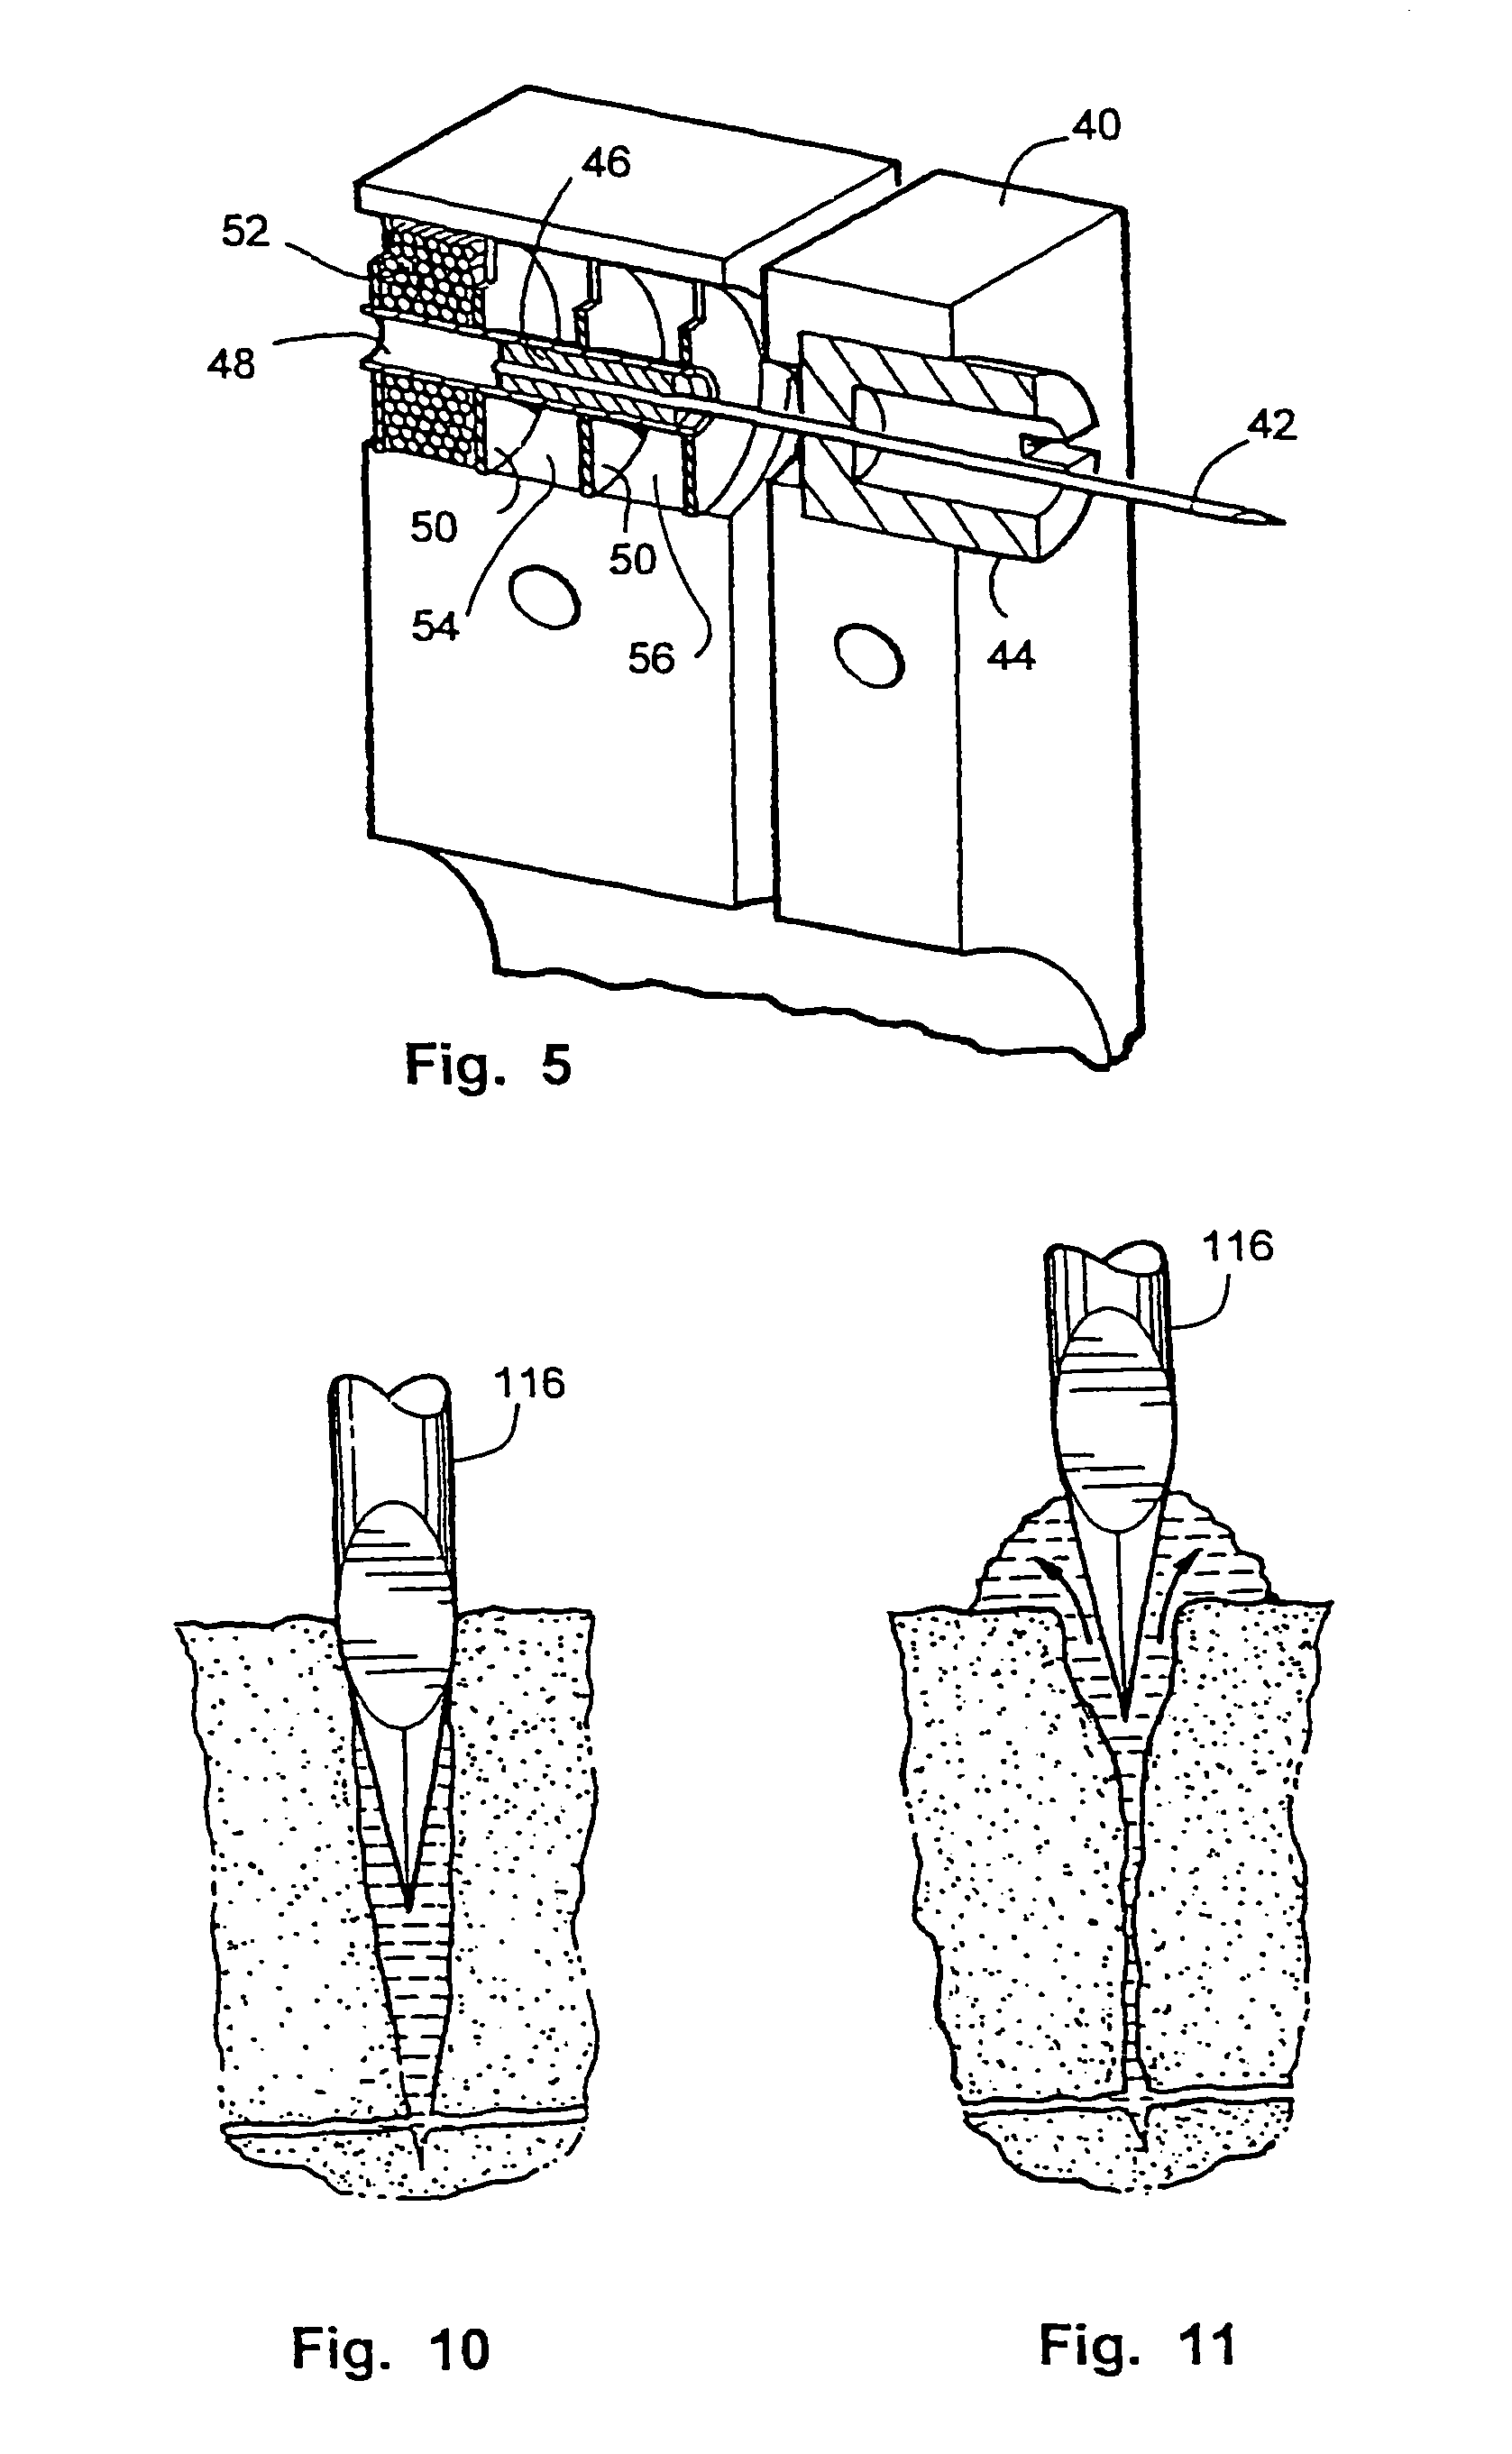 Tissue penetration device